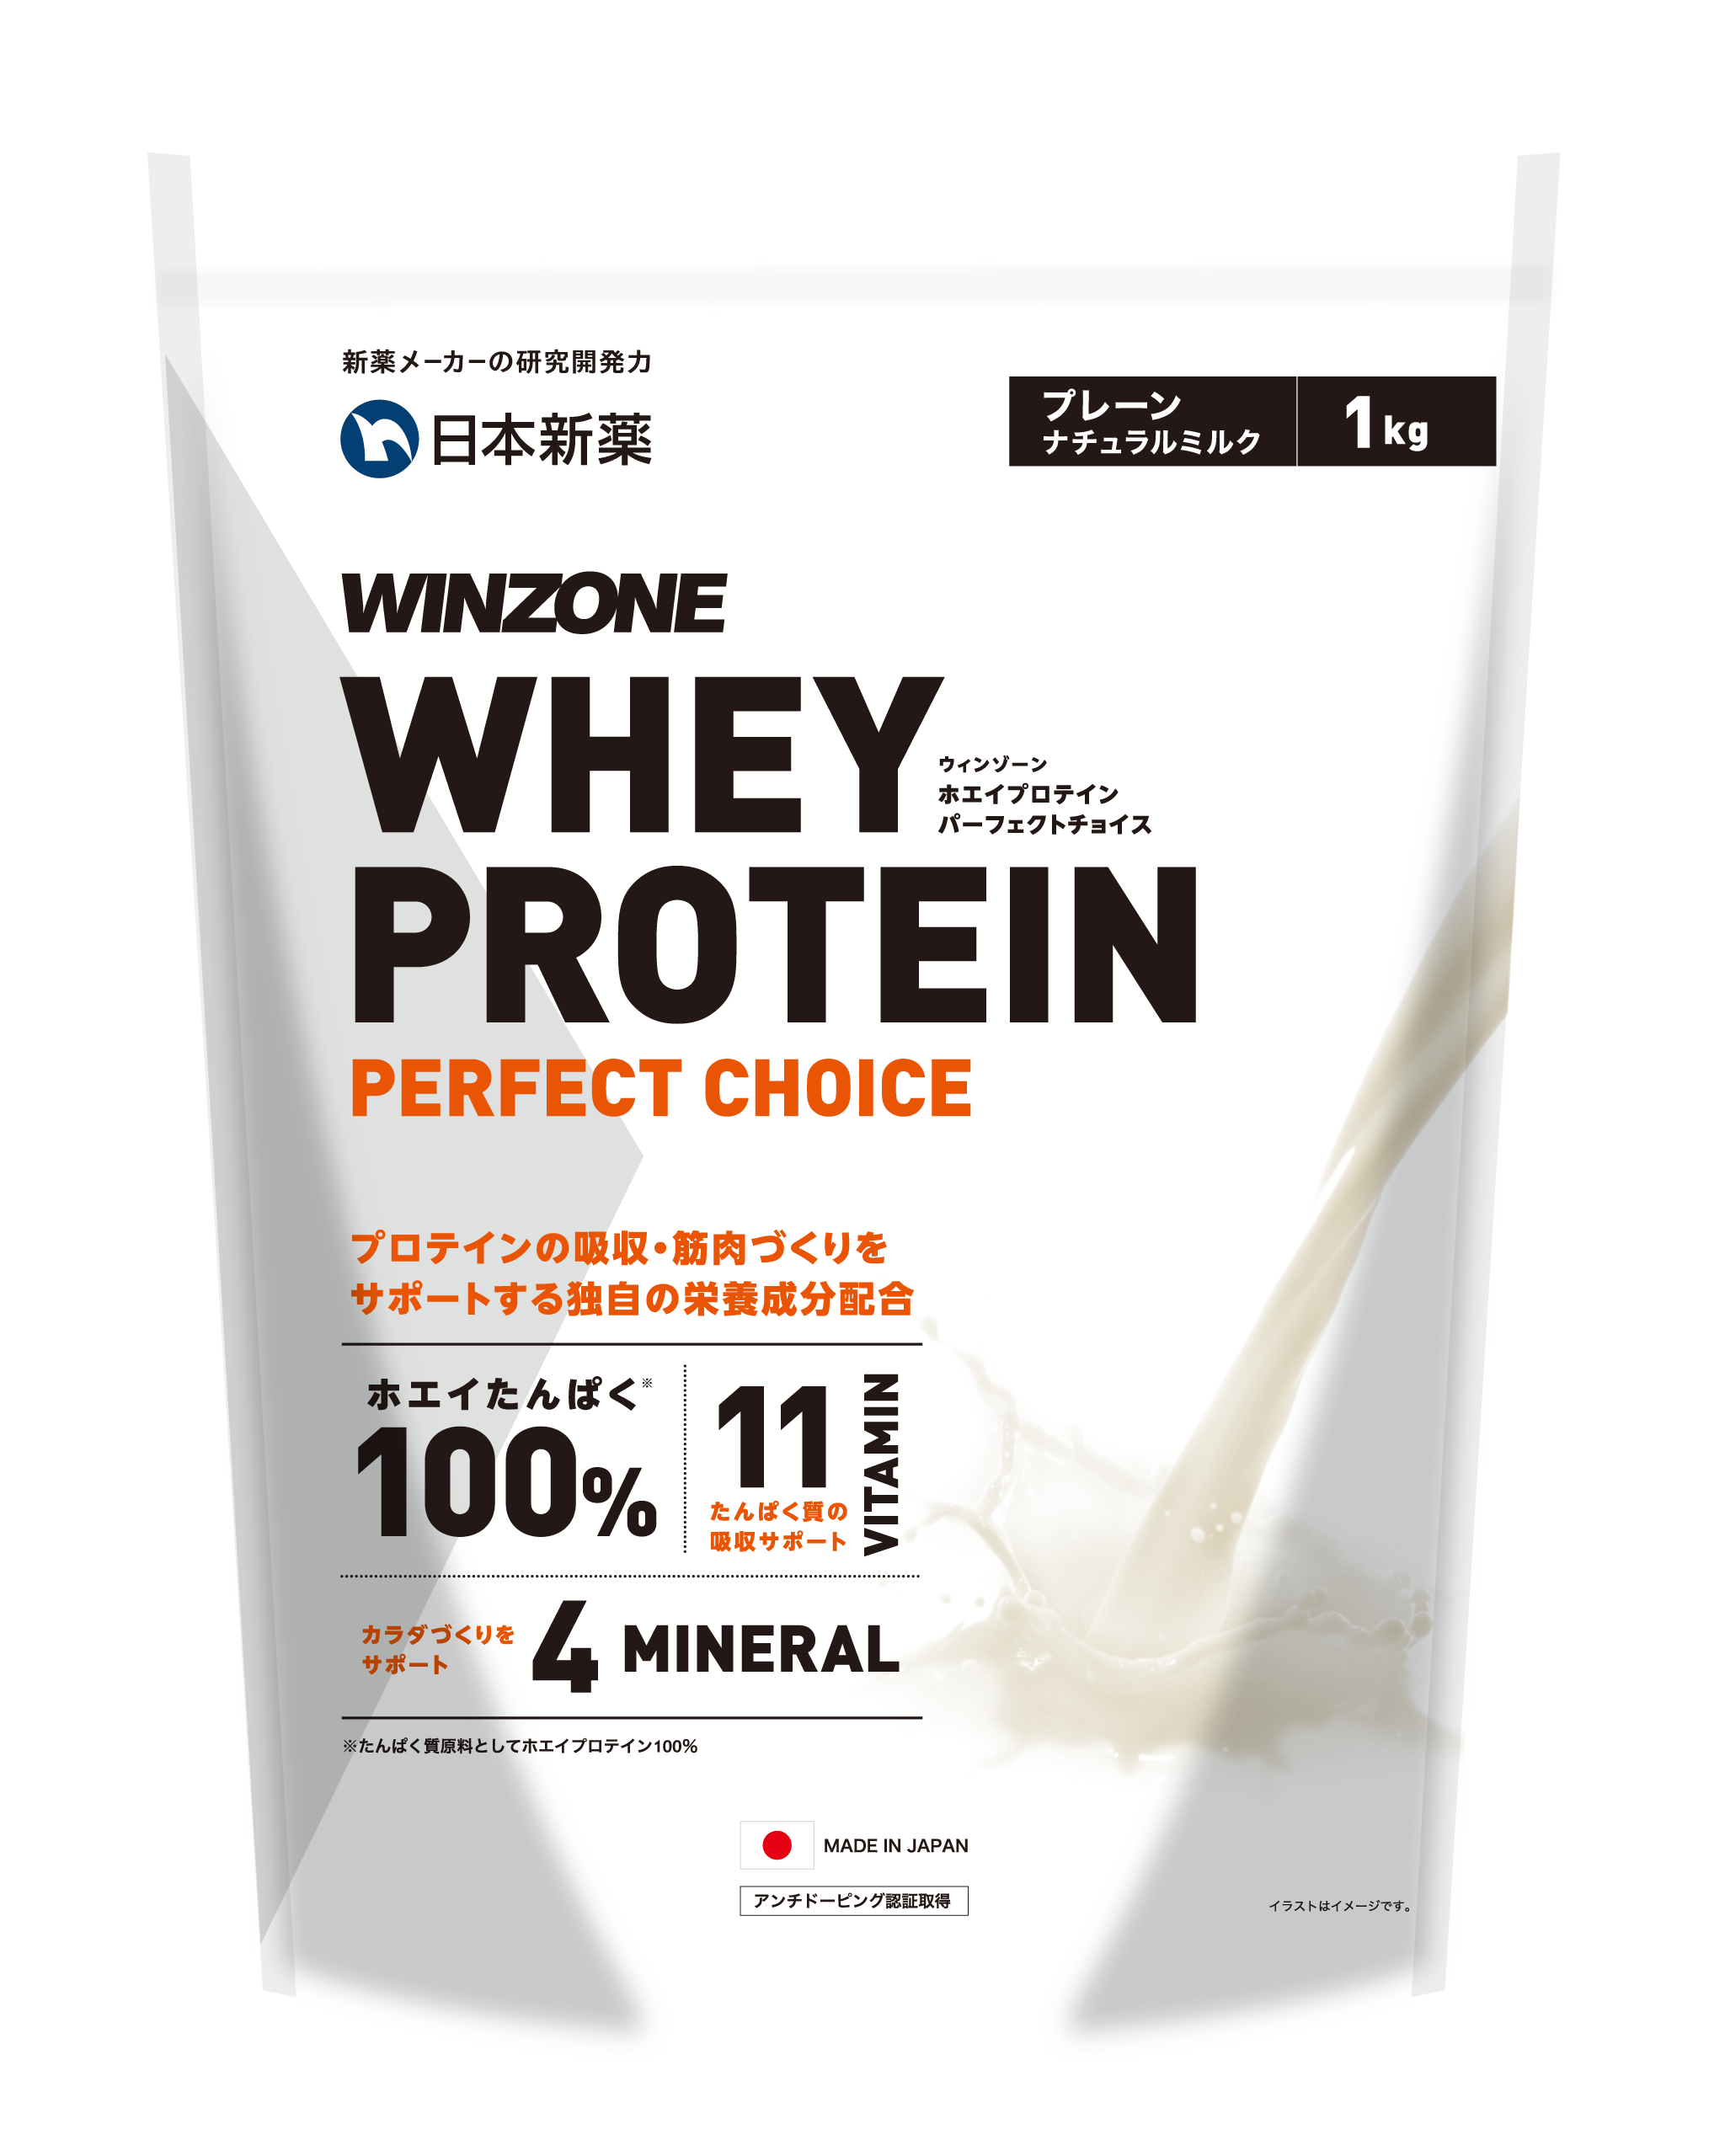 「WINZONE WHEY PROTEIN PERFECT CHOICE」
(ウィゾーン ホエイ プロテイン パーフェクトチョイス)
　8月6日よりリニューアル発売開始